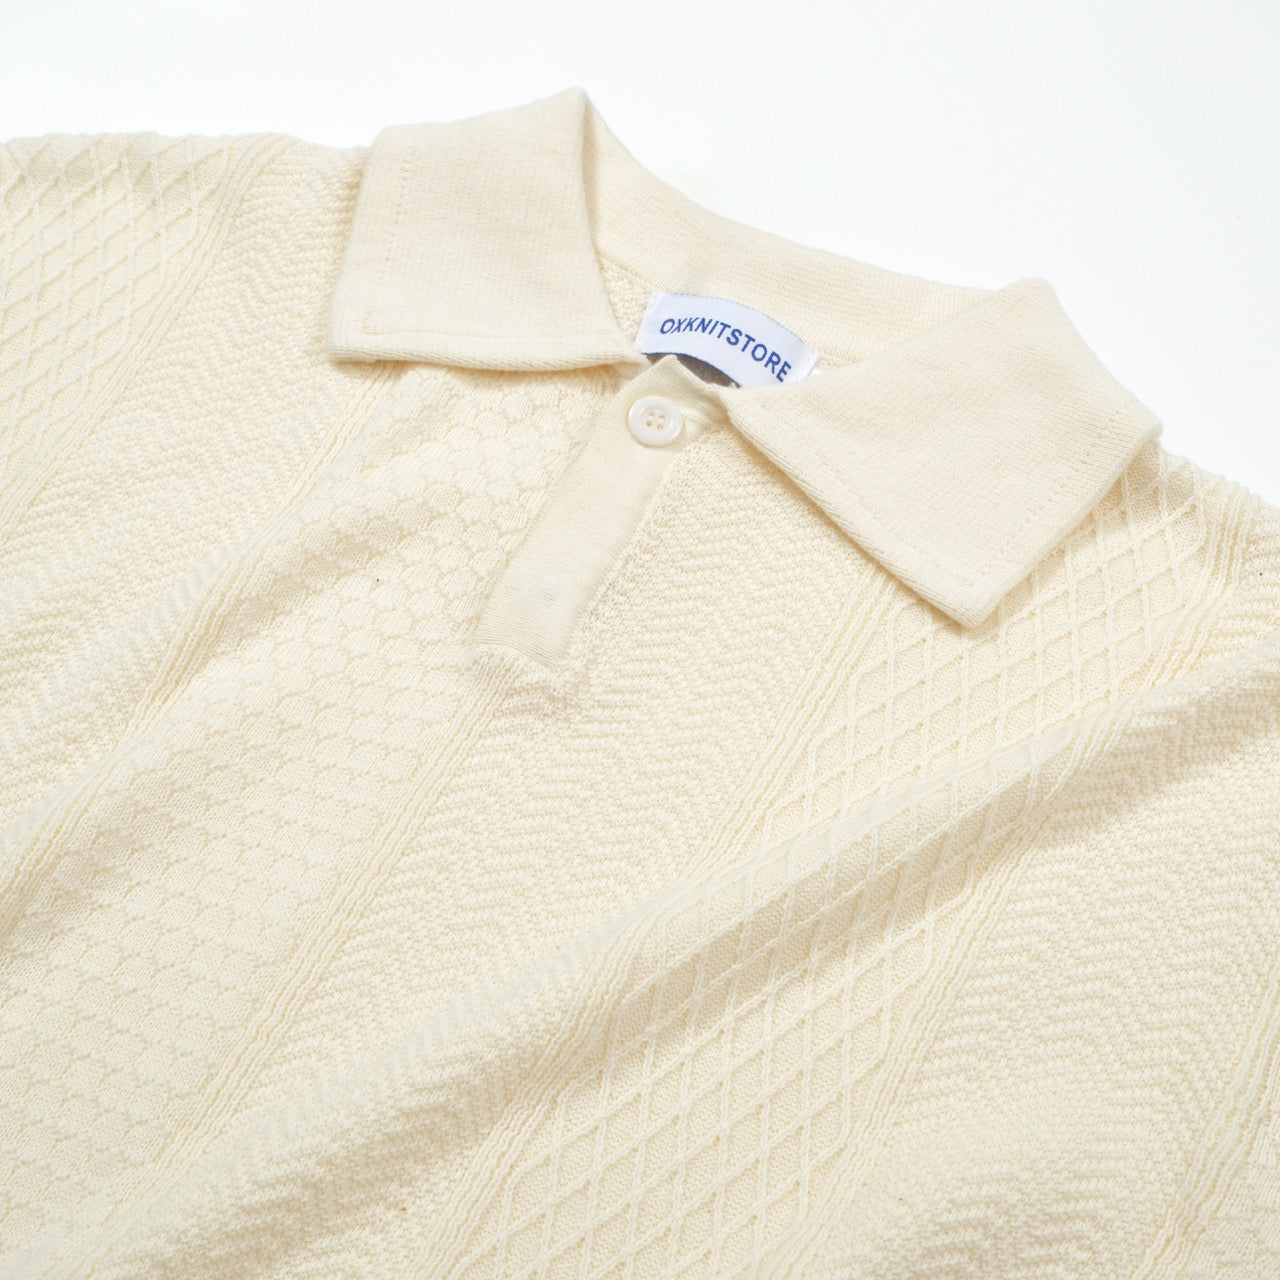 OXKNIT Men Vintage Clothing 1960s Mod Style Casual White Knit Retro Polo